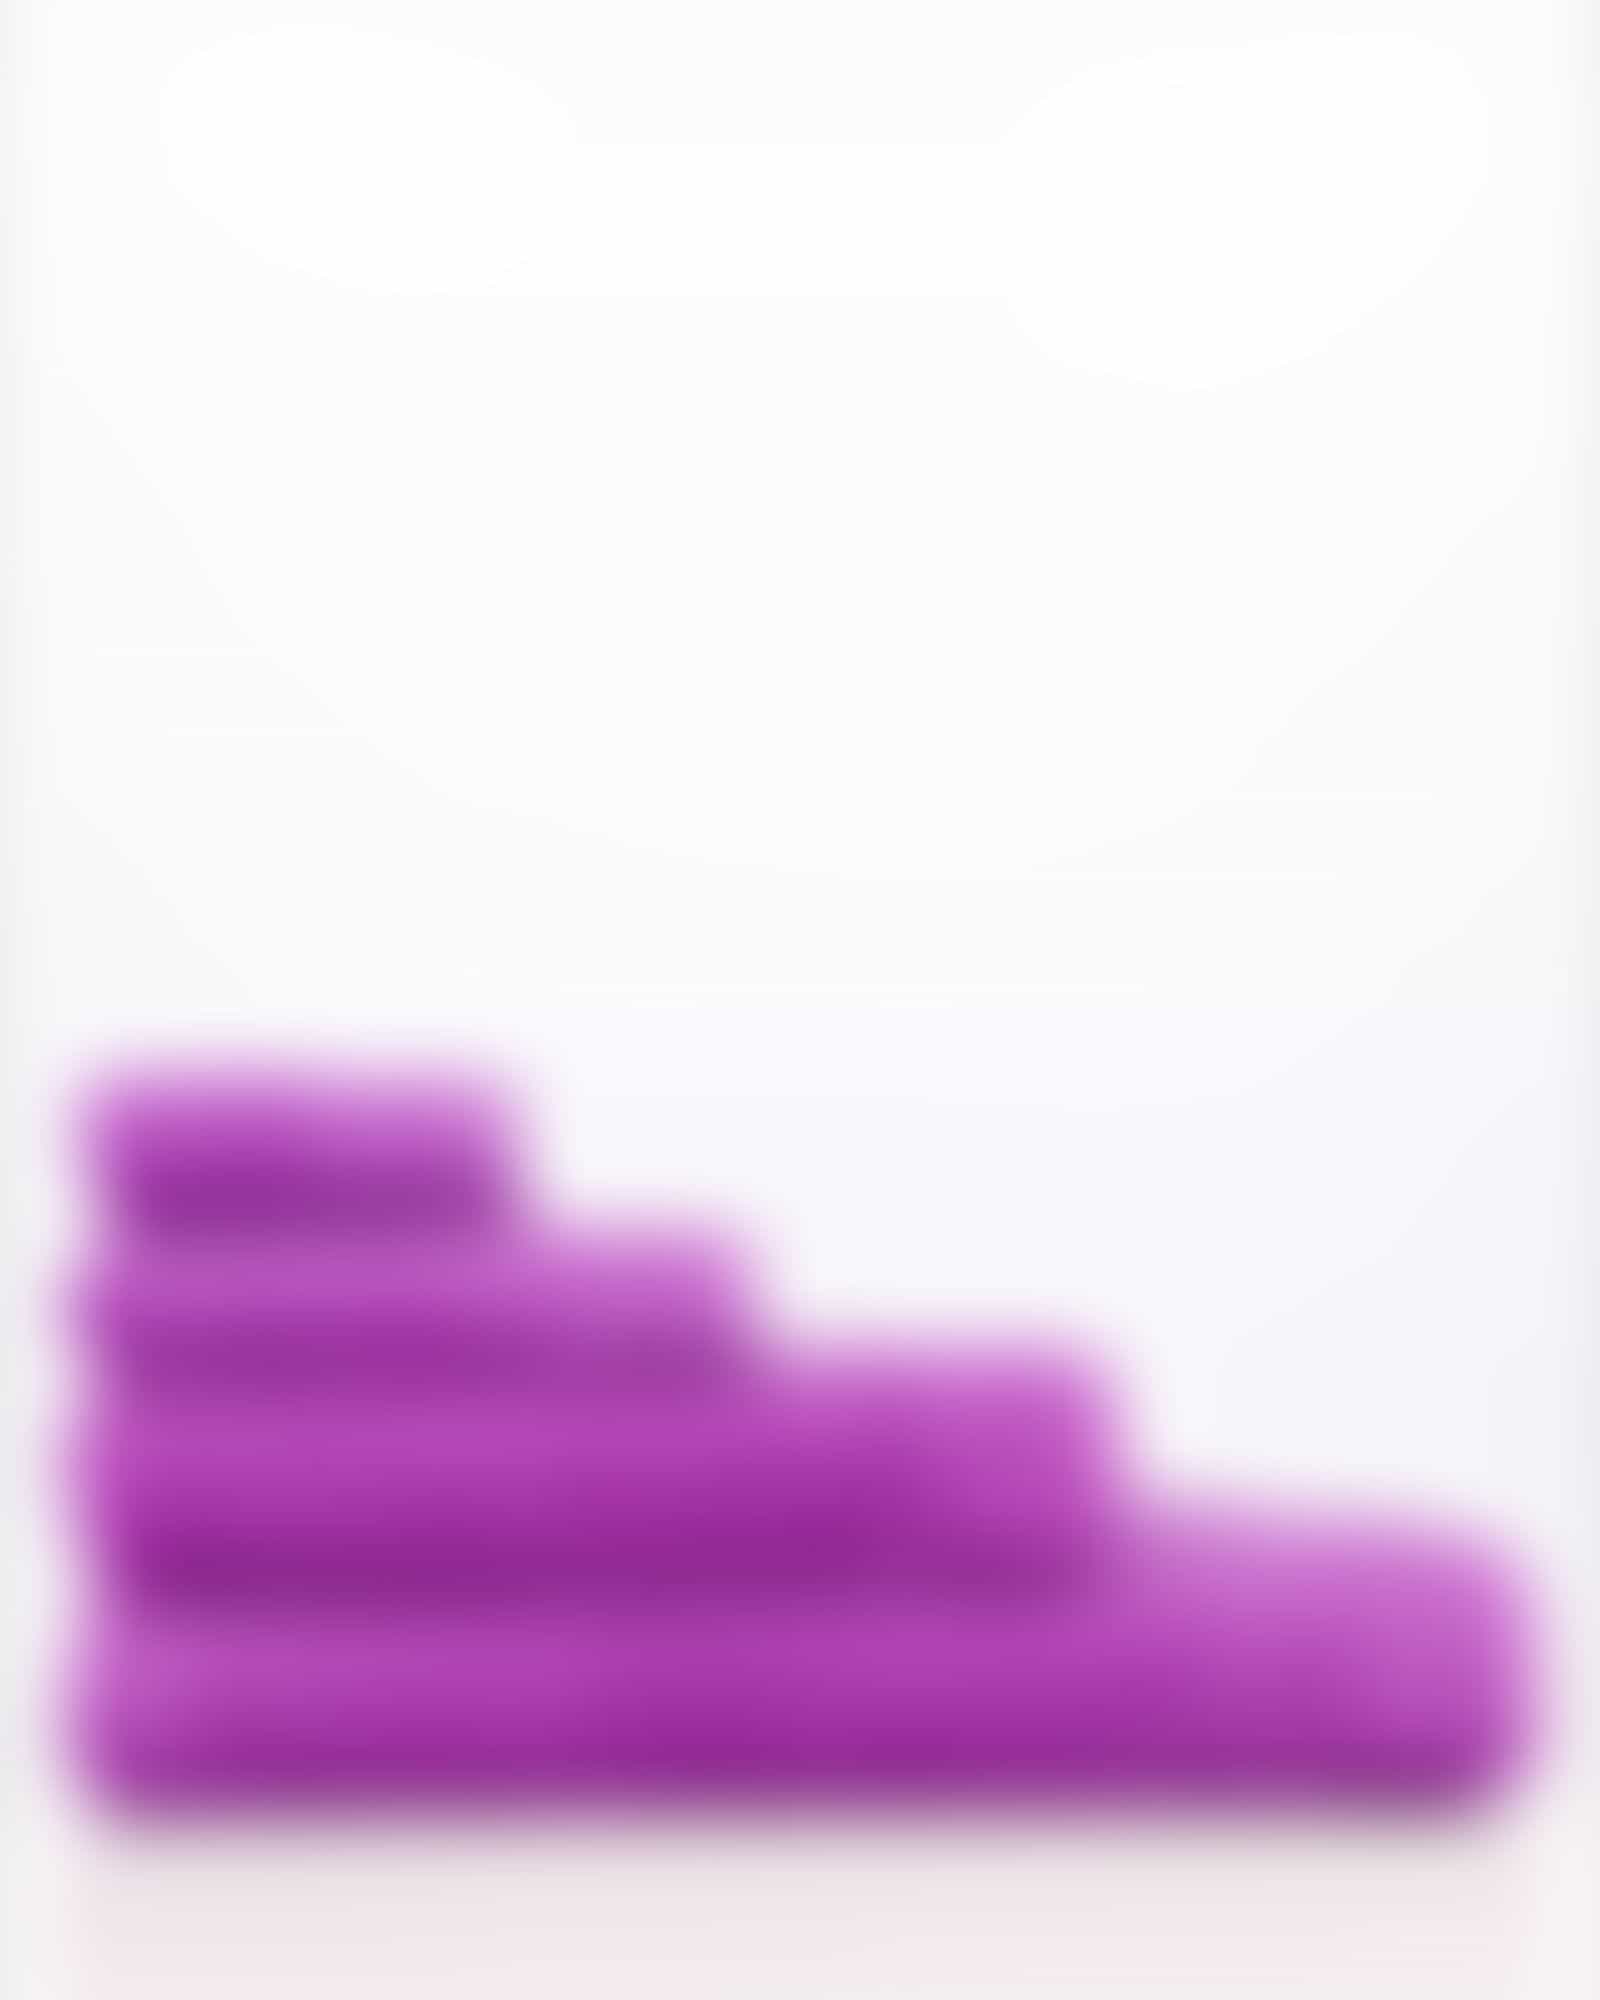 Vossen Handtücher Calypso Feeling - Farbe: lollipop - 8460 - Badetuch 100x150 cm Detailbild 3